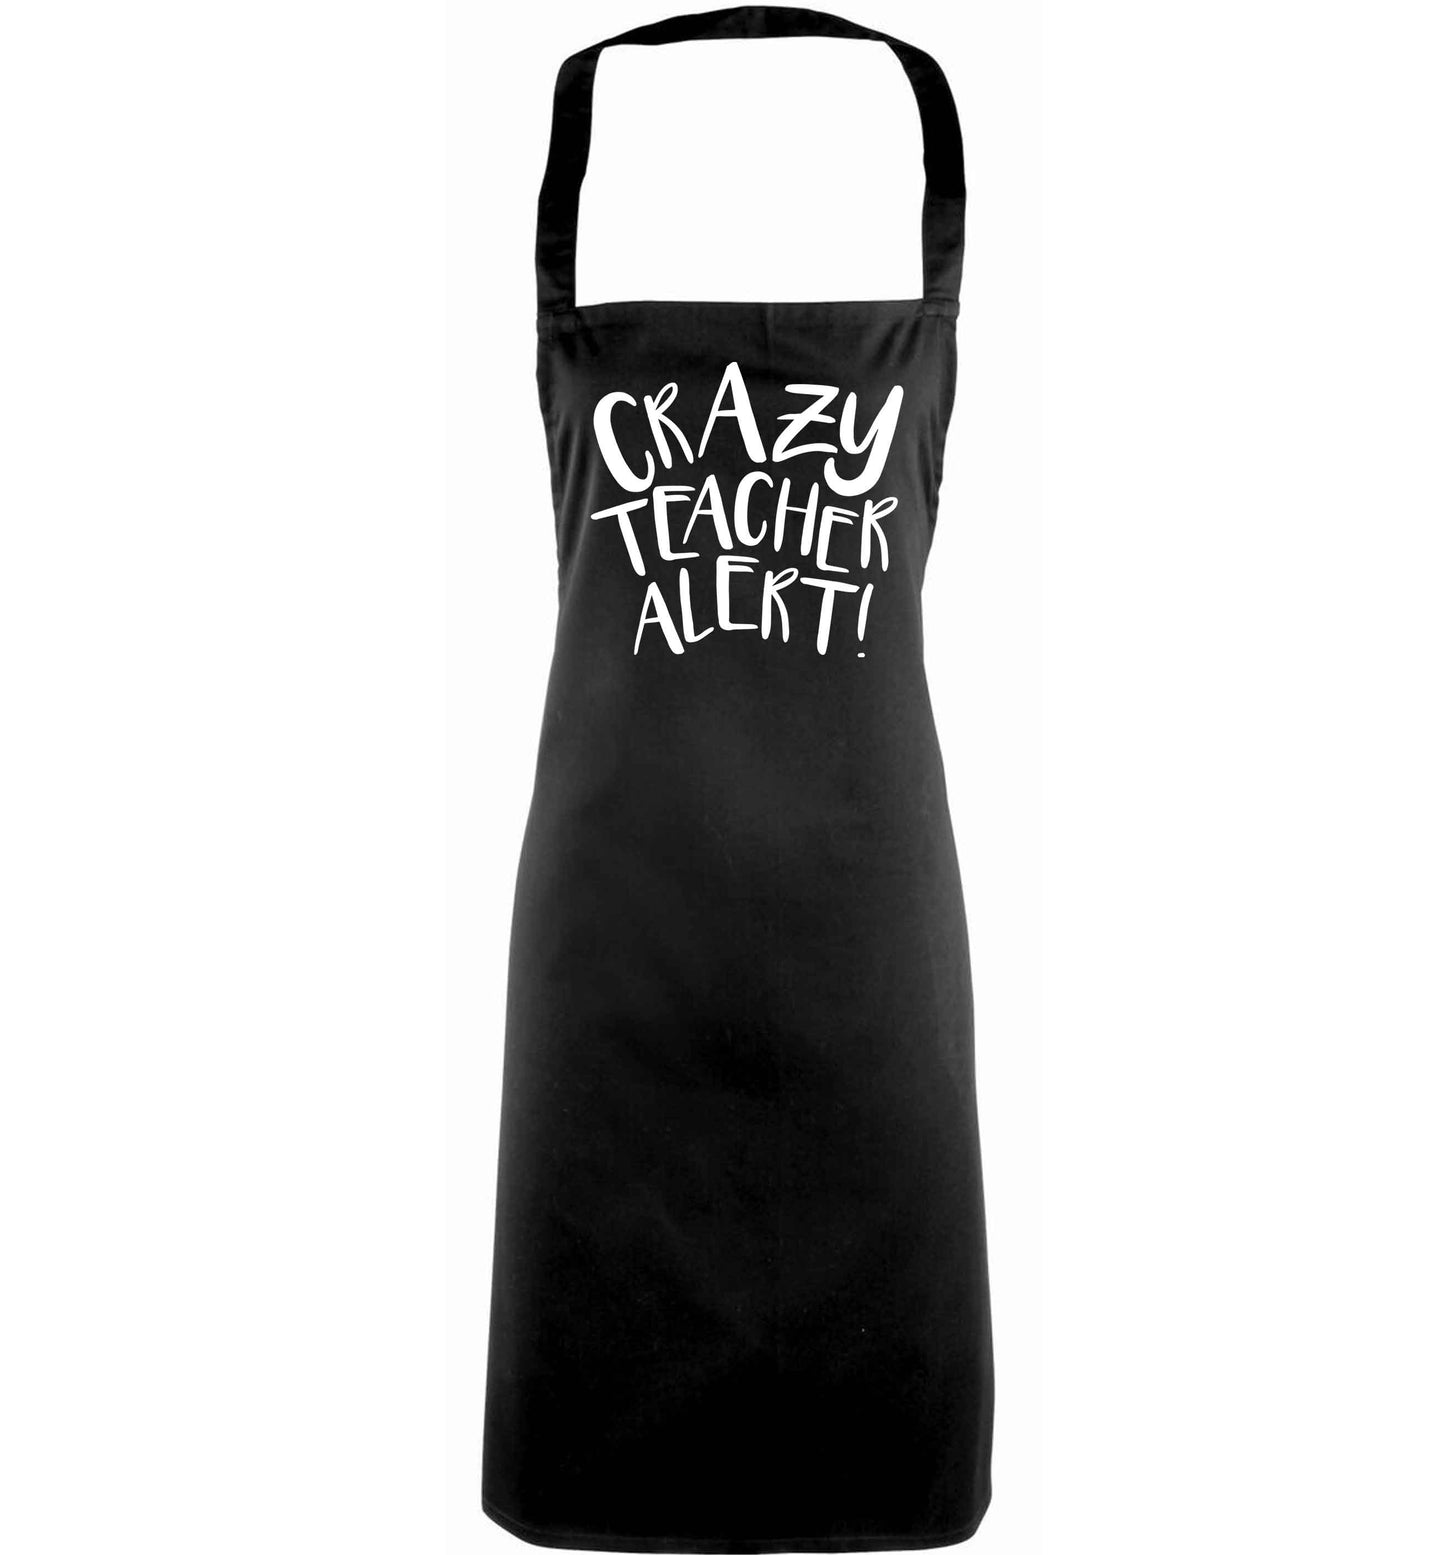 Crazy teacher alert adults black apron